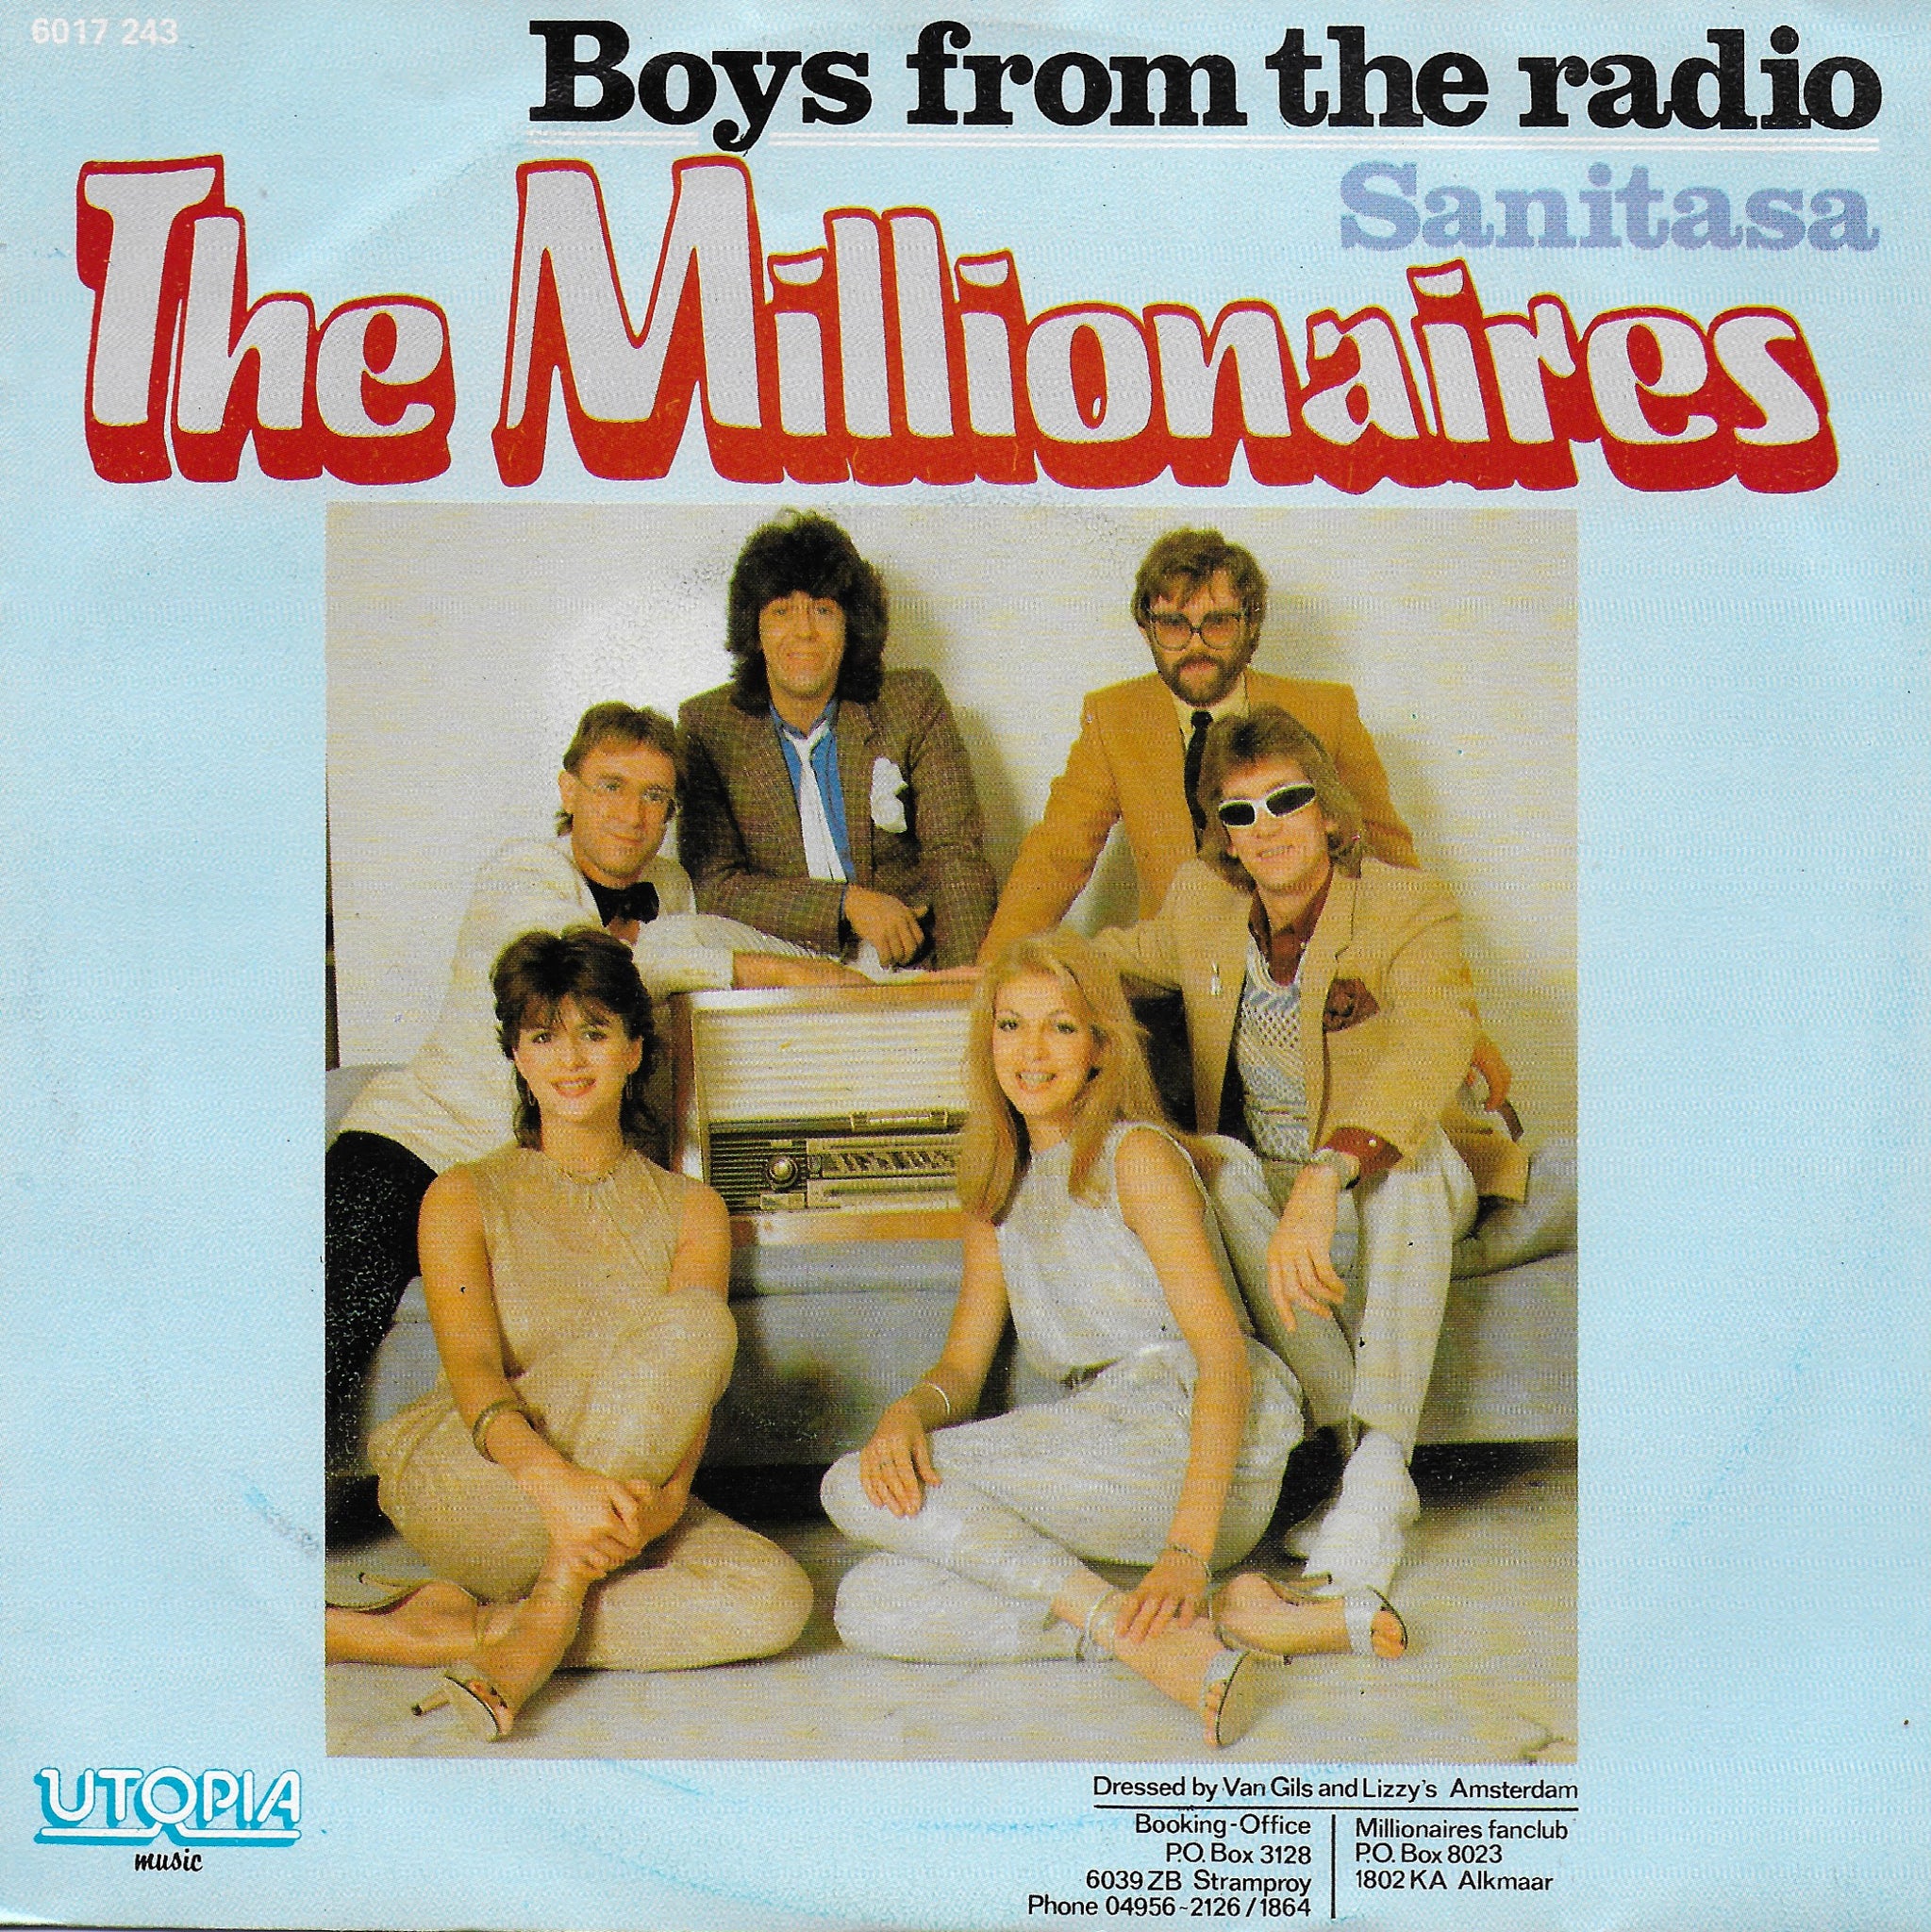 Millionaires - Boys from the radio